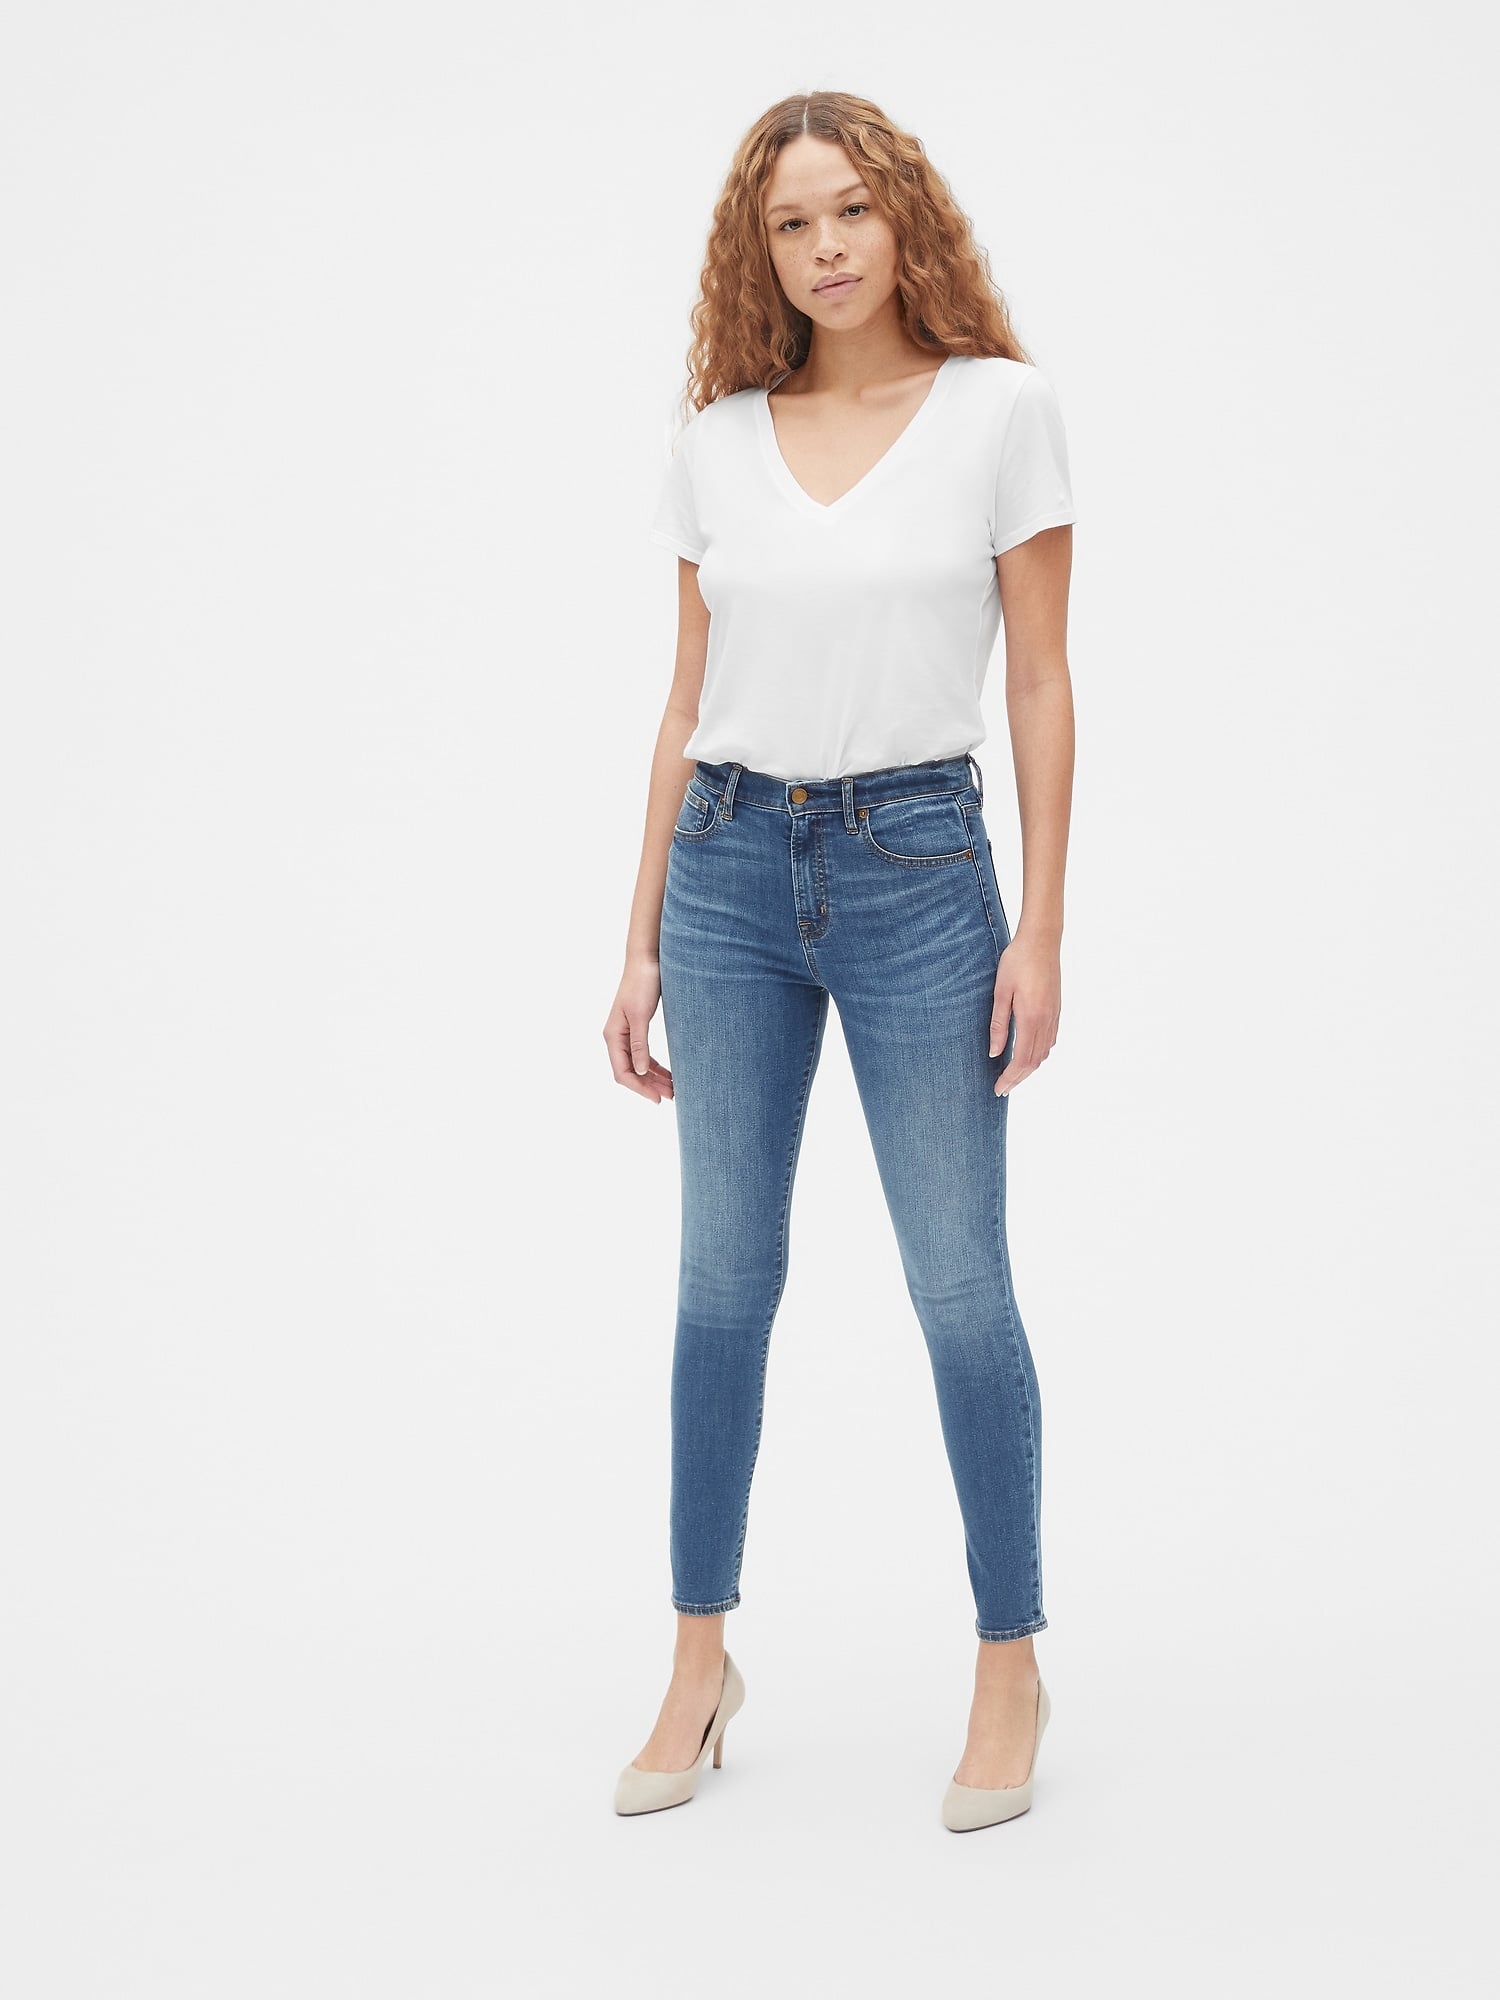 veiling Augment salade Best Gap Jeans for Women | POPSUGAR Fashion